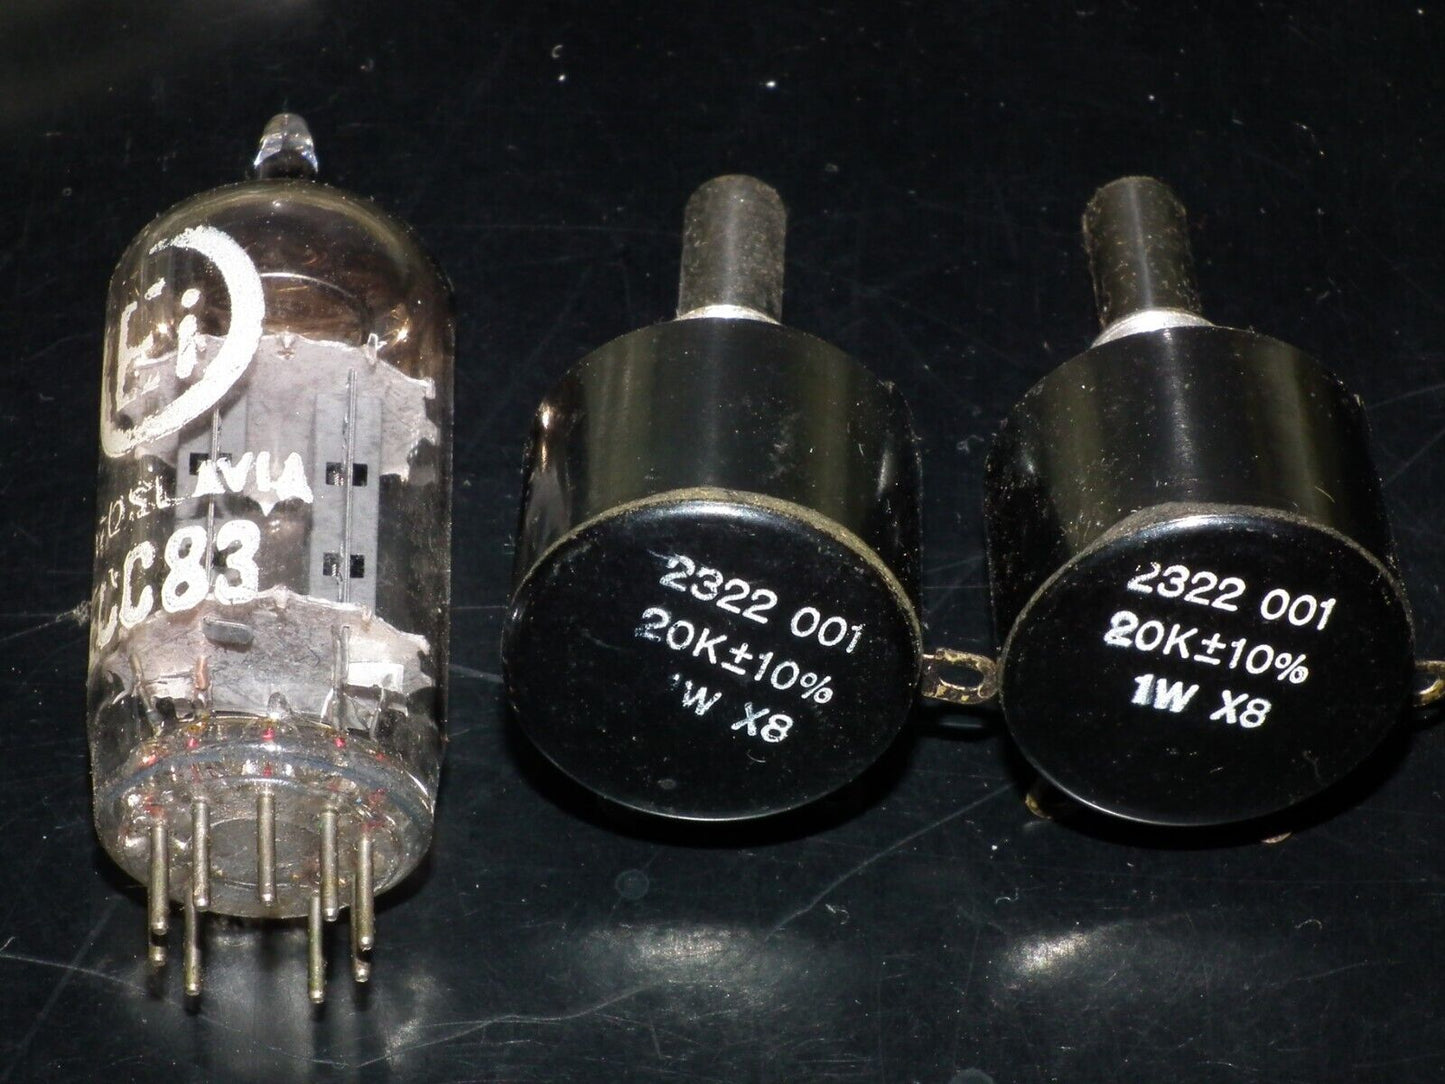 Two (2) NOS vintage potentiometer 20 KOhm 1W X8 2322 001 20K 1W 10%